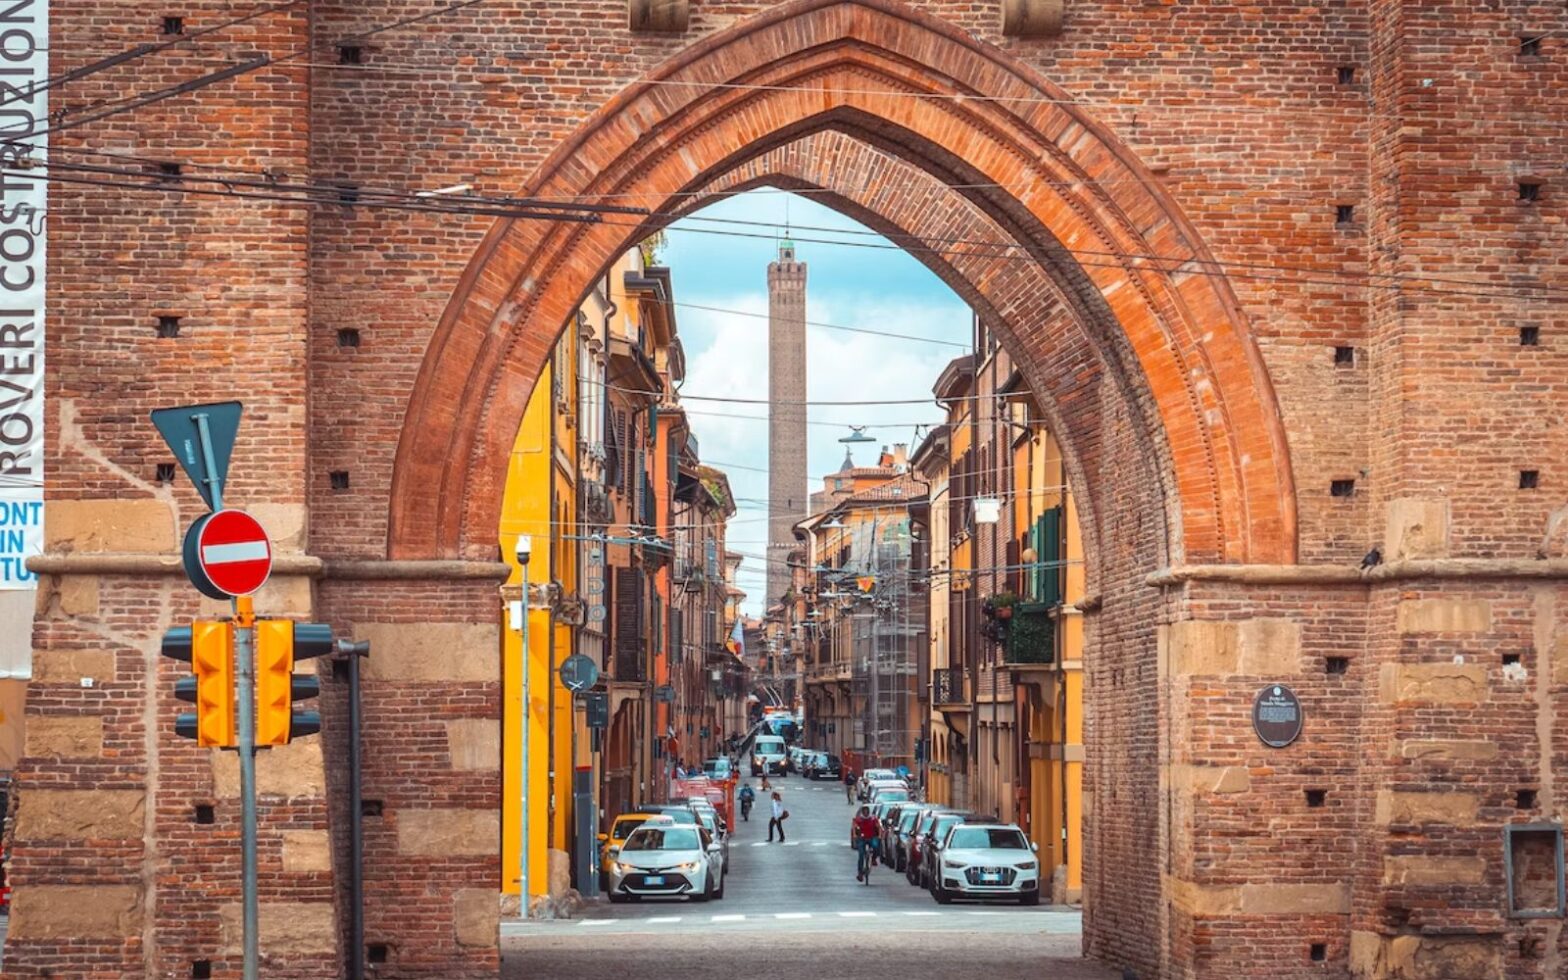 Porta Maggiore, Bologna, Metropolitan City of Bologna, Italy - underrated hidden gem